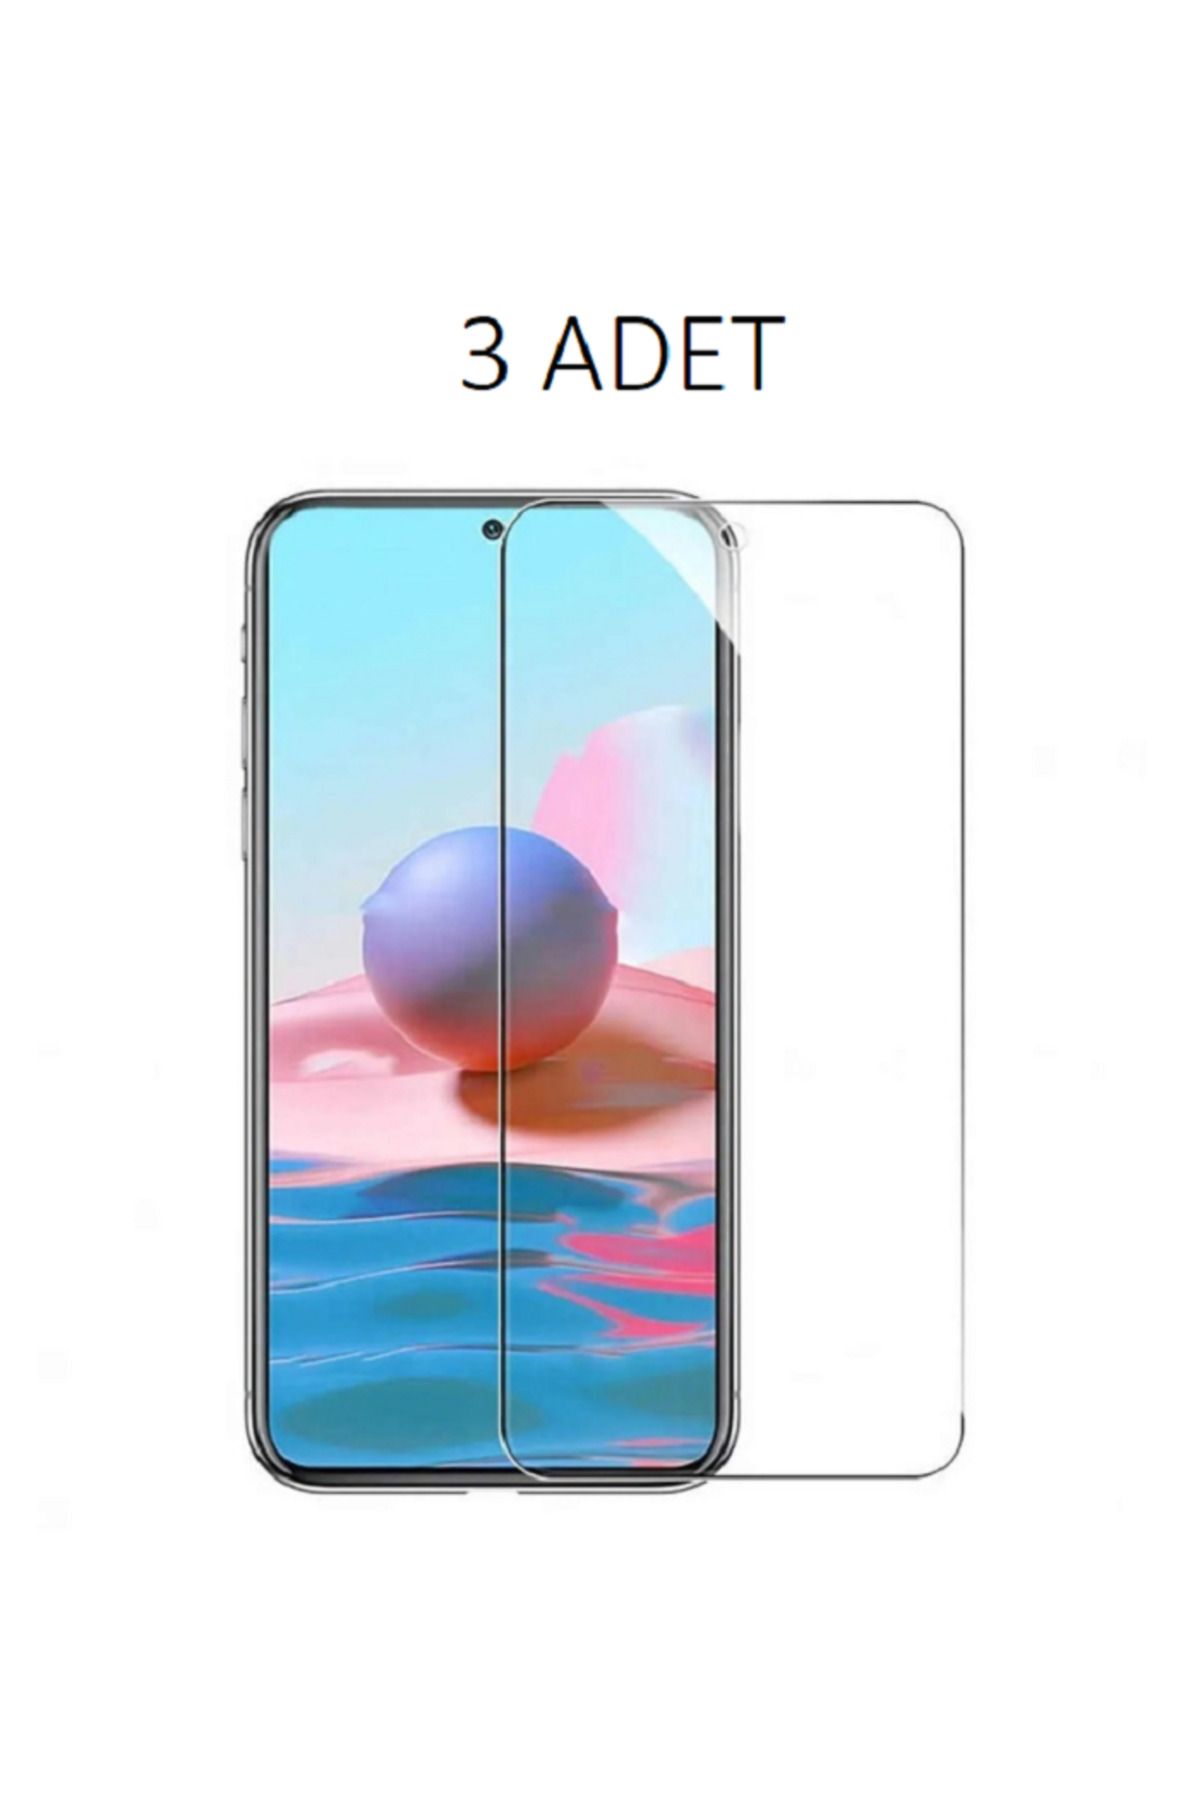 LG 3 ADET LG G3 Stylus Uyumlu Şeffaf Esnek Nano Ekran Koruyucu